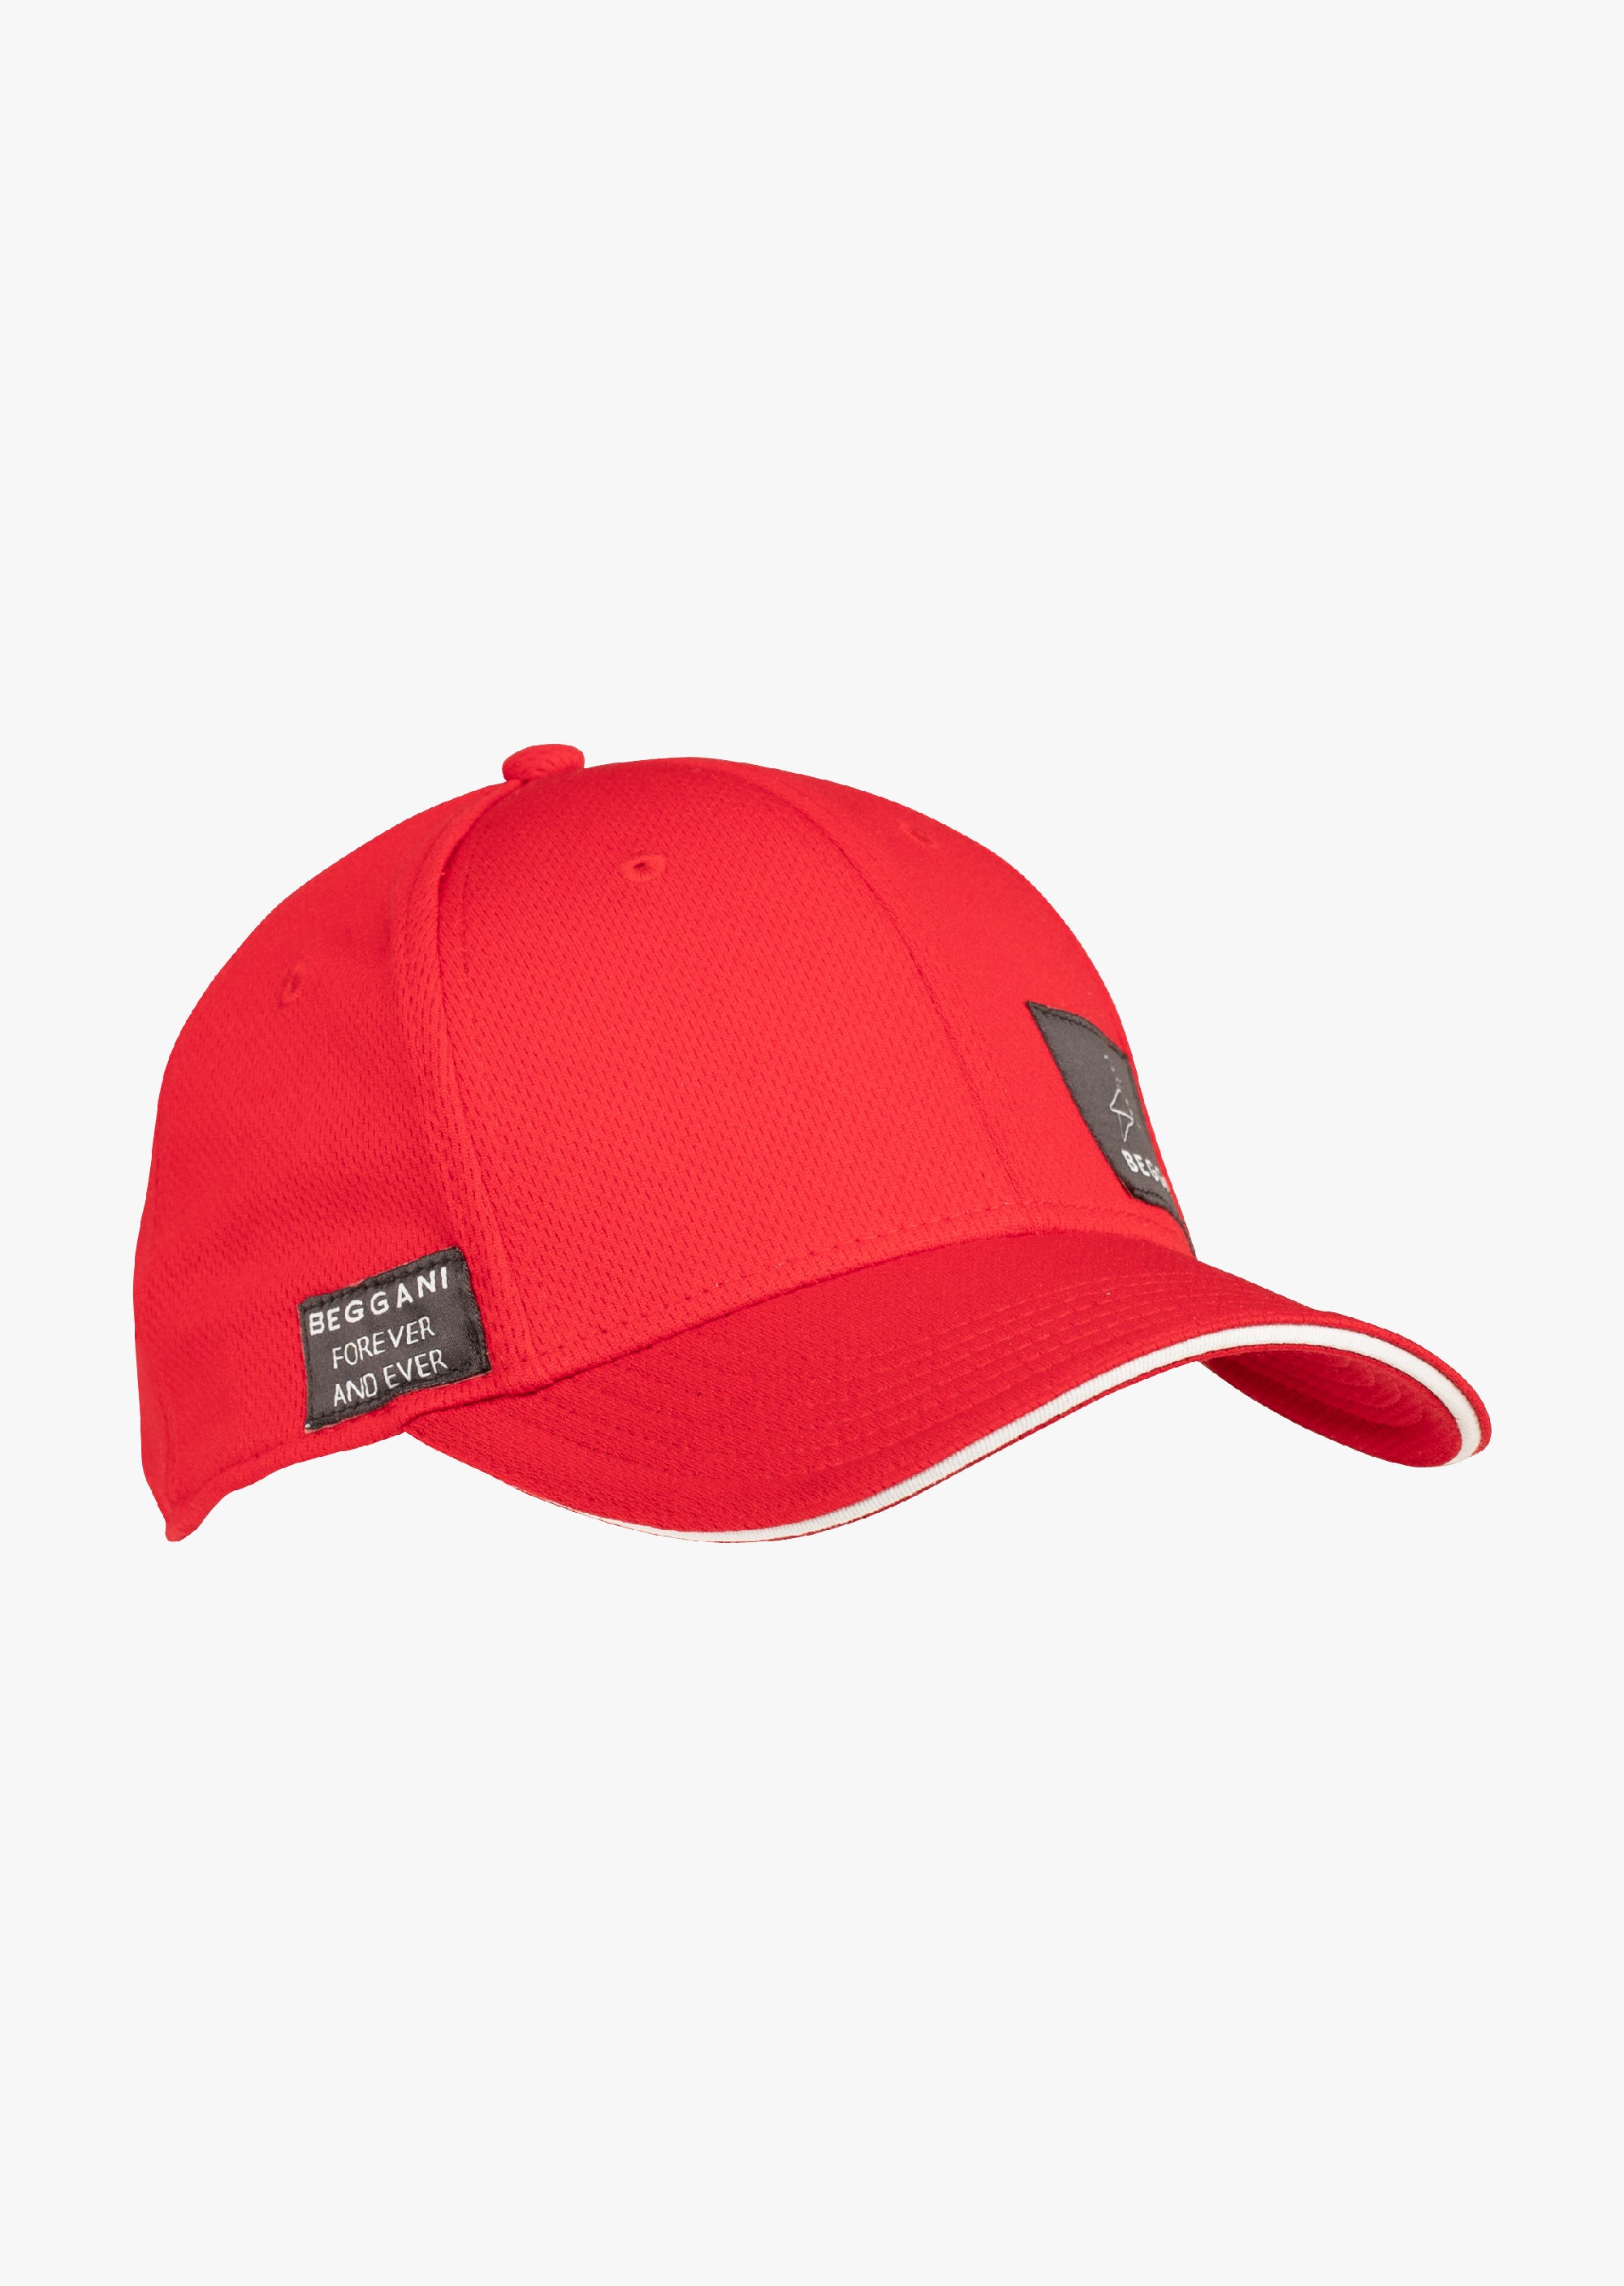 Baseball cap with logo BEGGANI